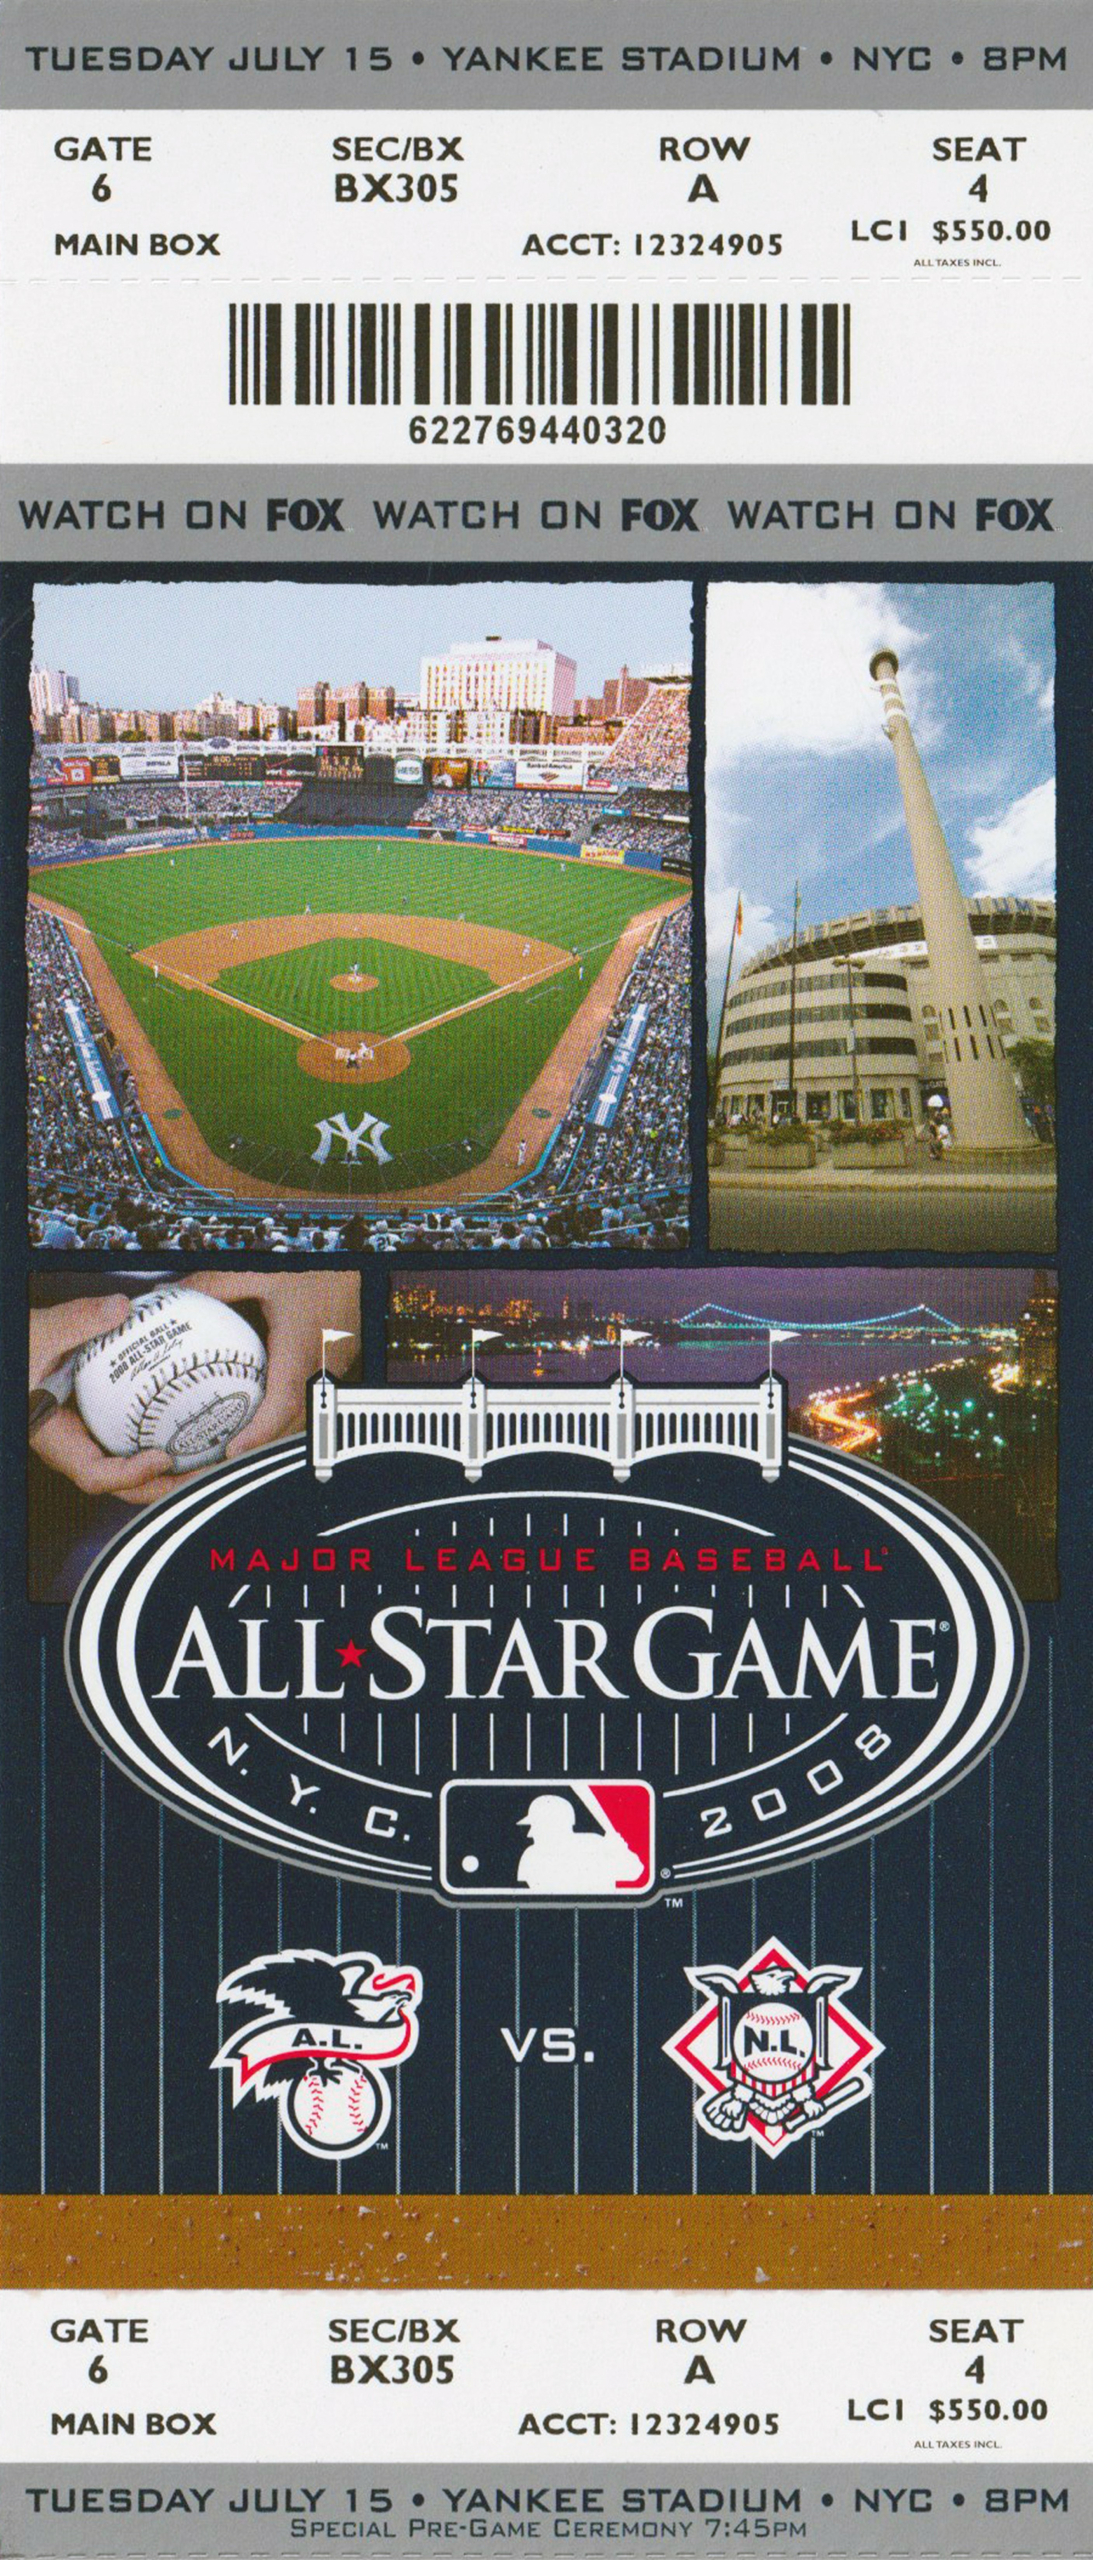 2008 All-Star Game ticket (Courtesy of Todd Radom)